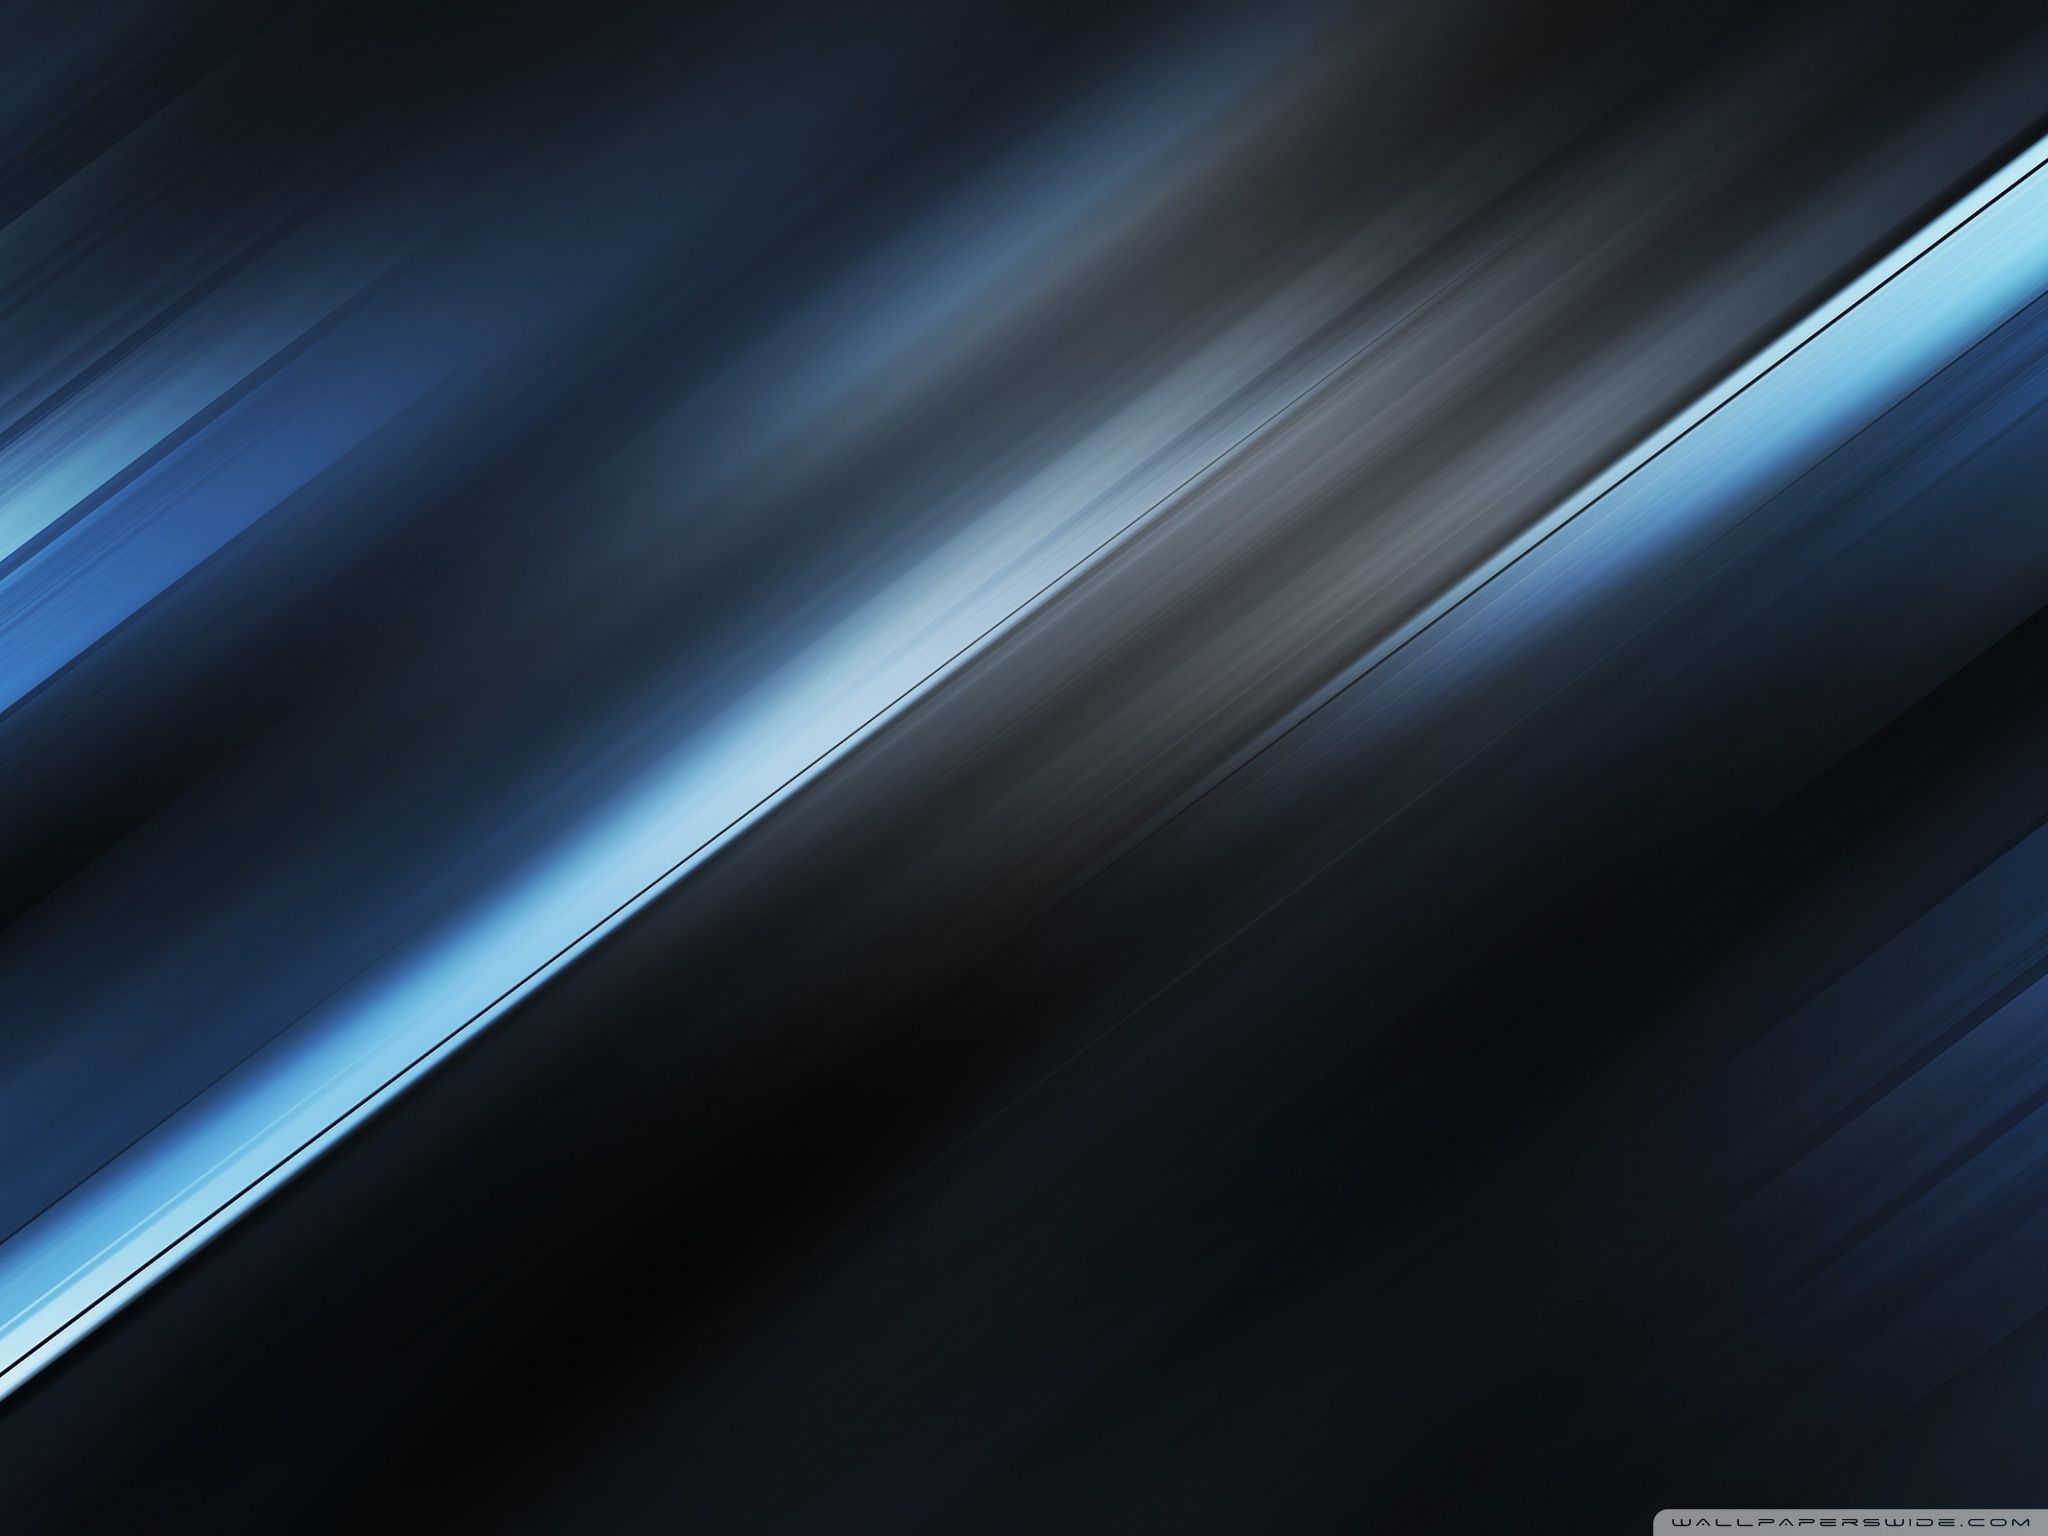 Fade Out Ultra HD Desktop Background Wallpaper for 4K UHD TV, Tablet